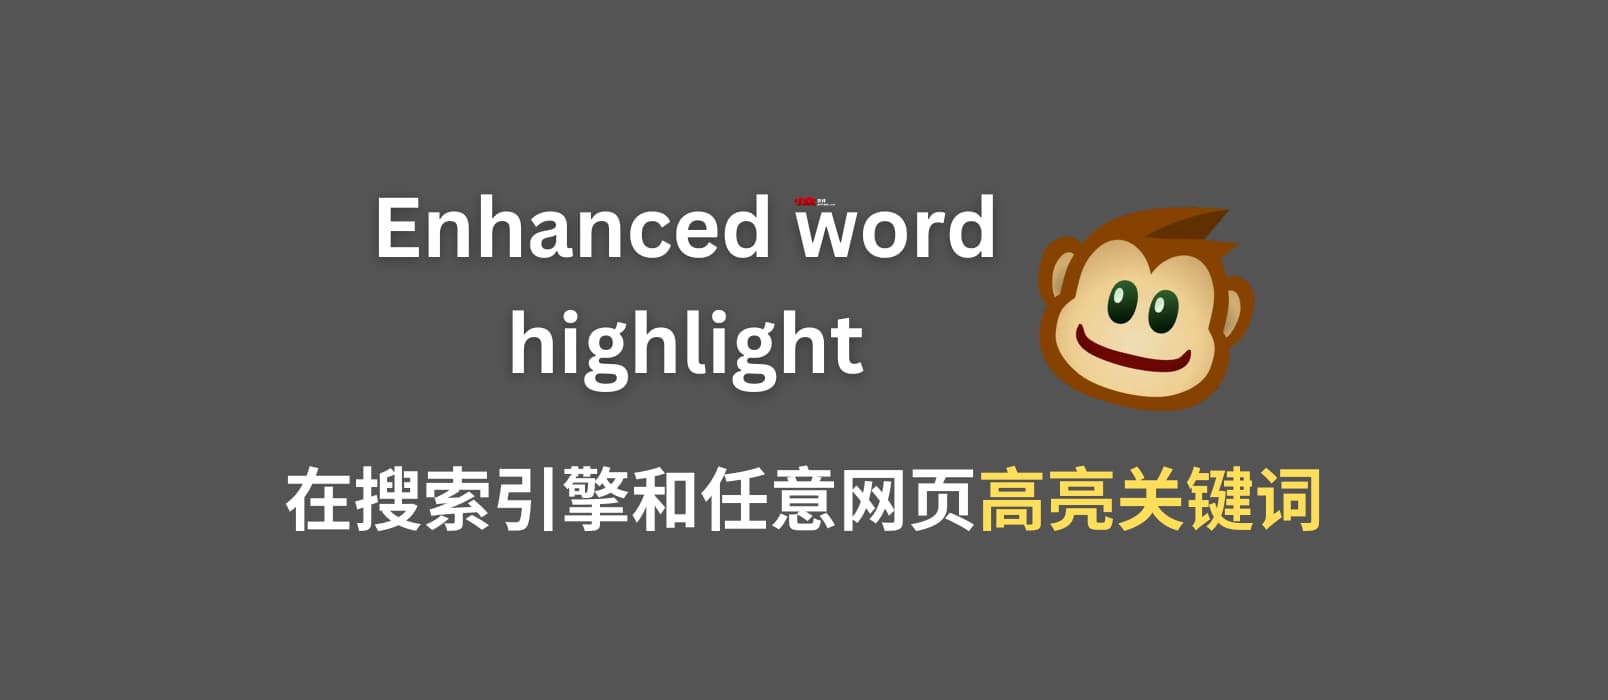 Enhanced word highlight - 创建10年的油猴脚本又更新了：在搜索引擎和网页高亮关键词 16